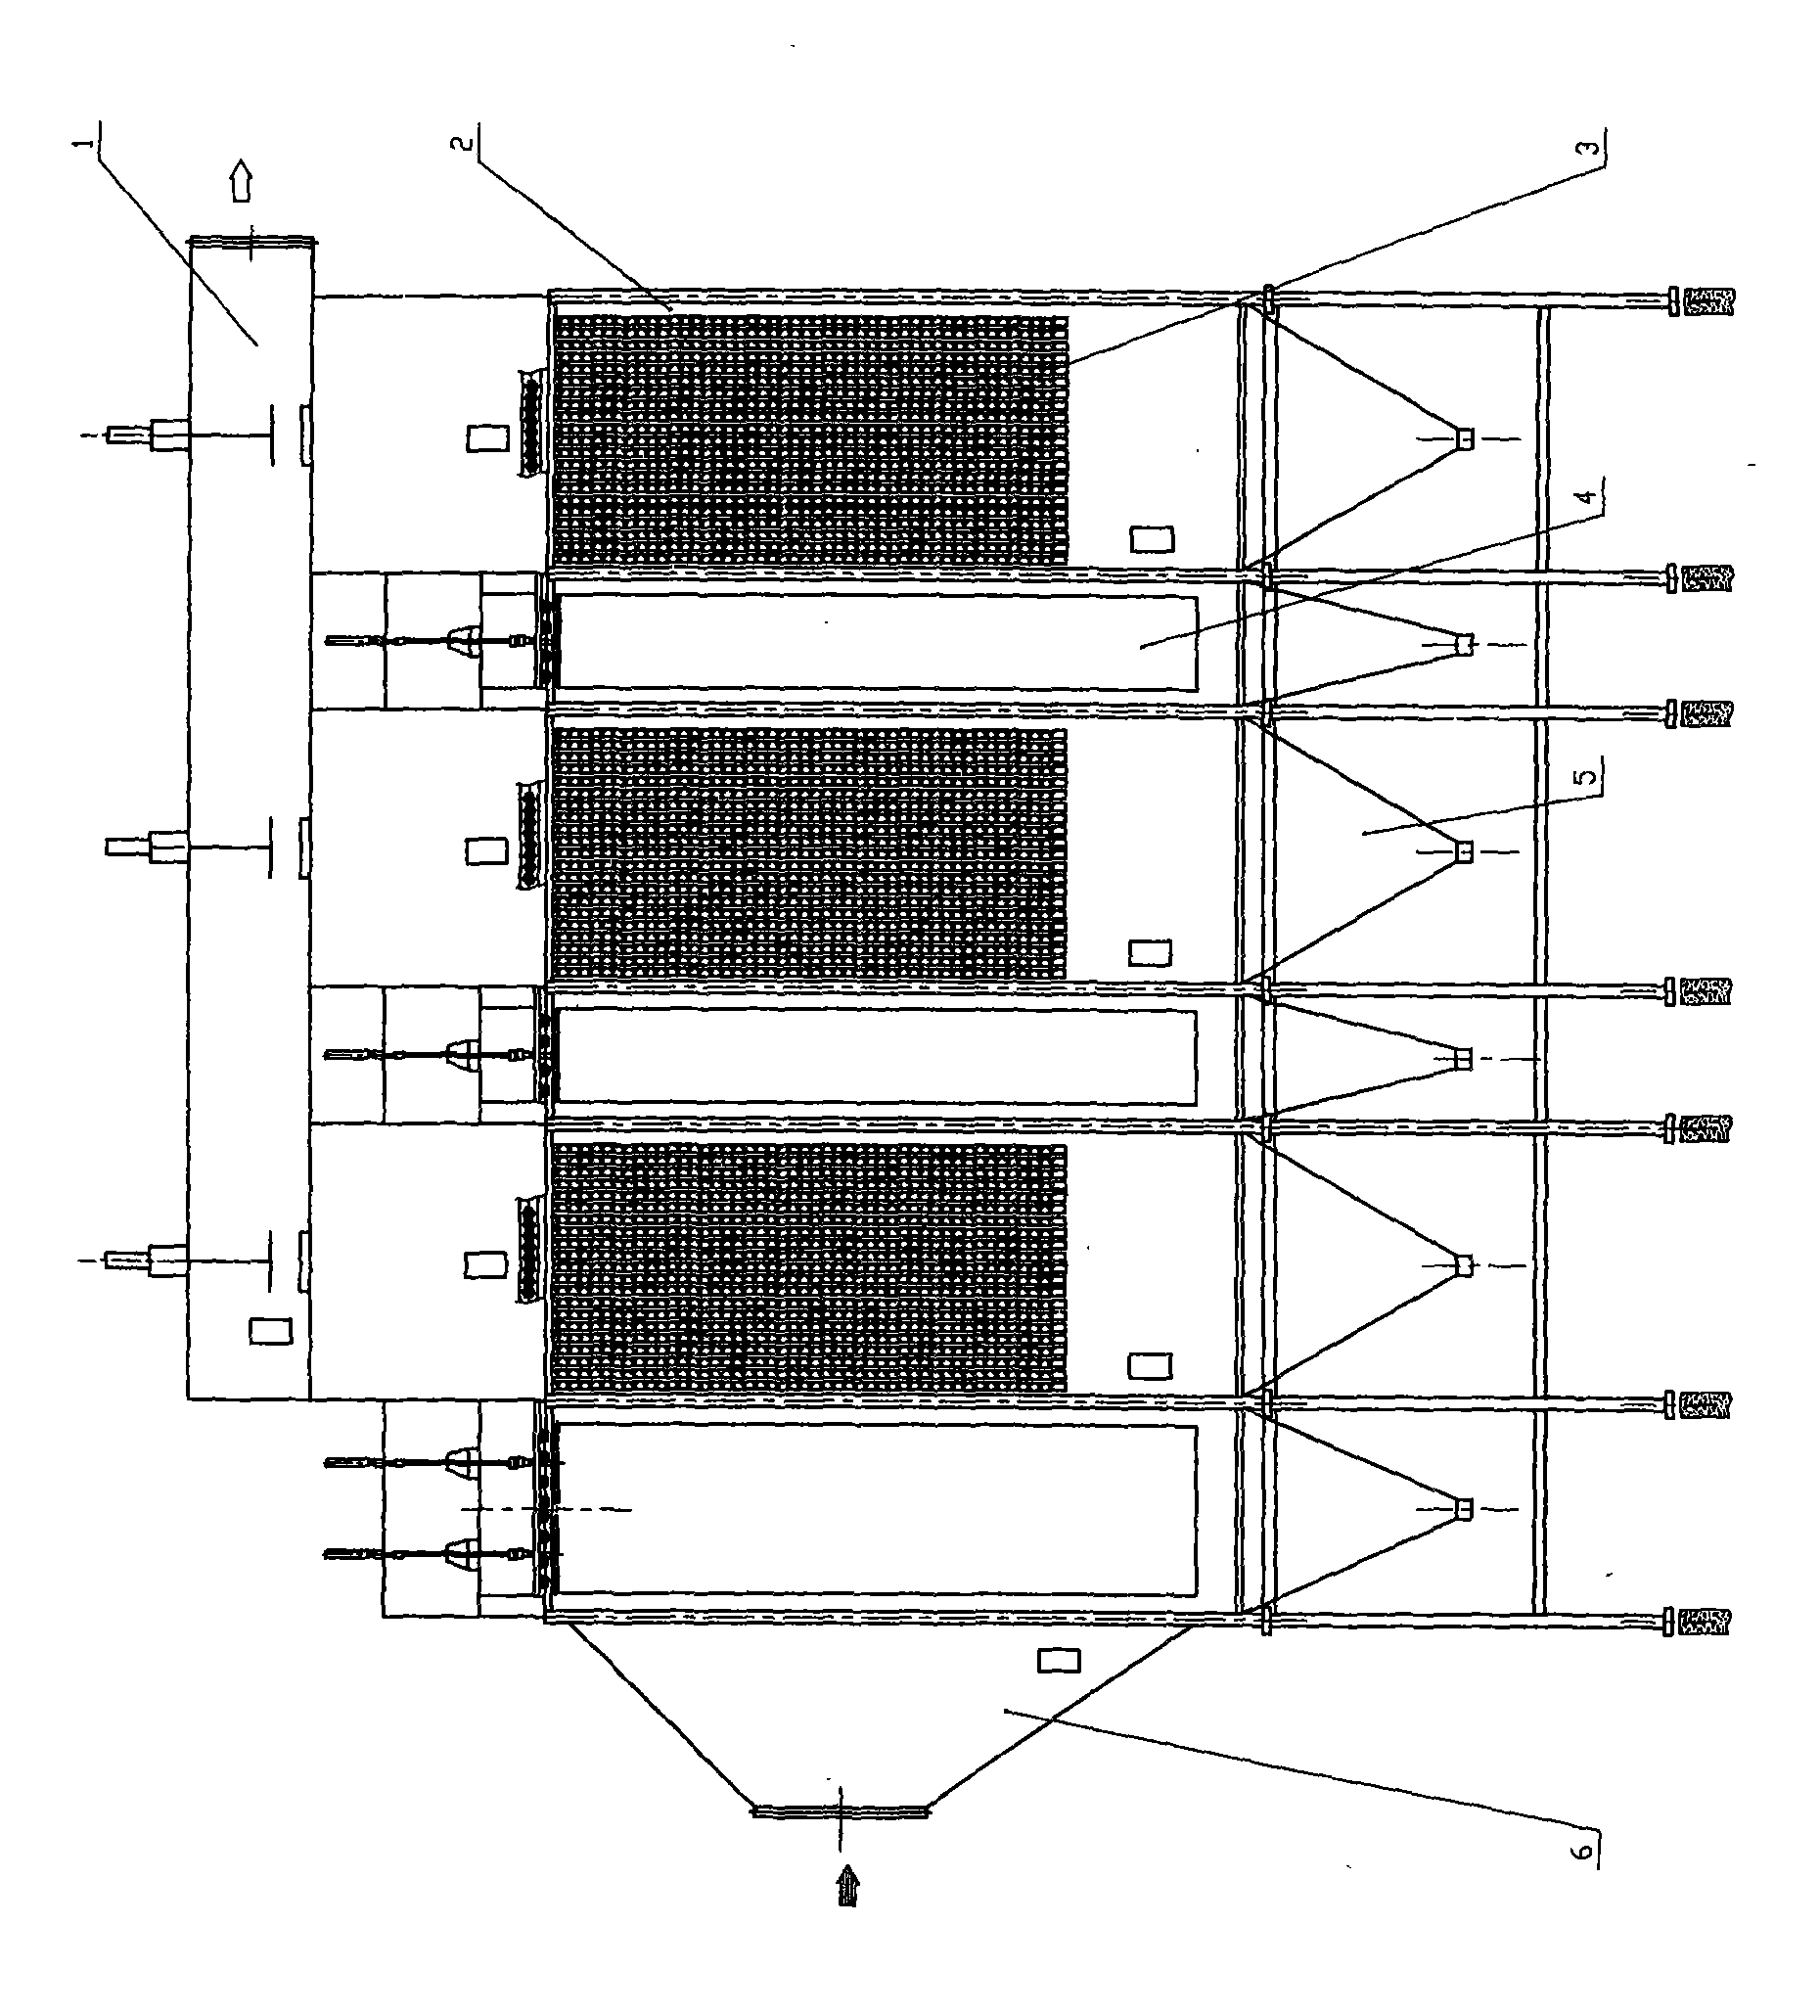 Multiple electrostatic fabric filters